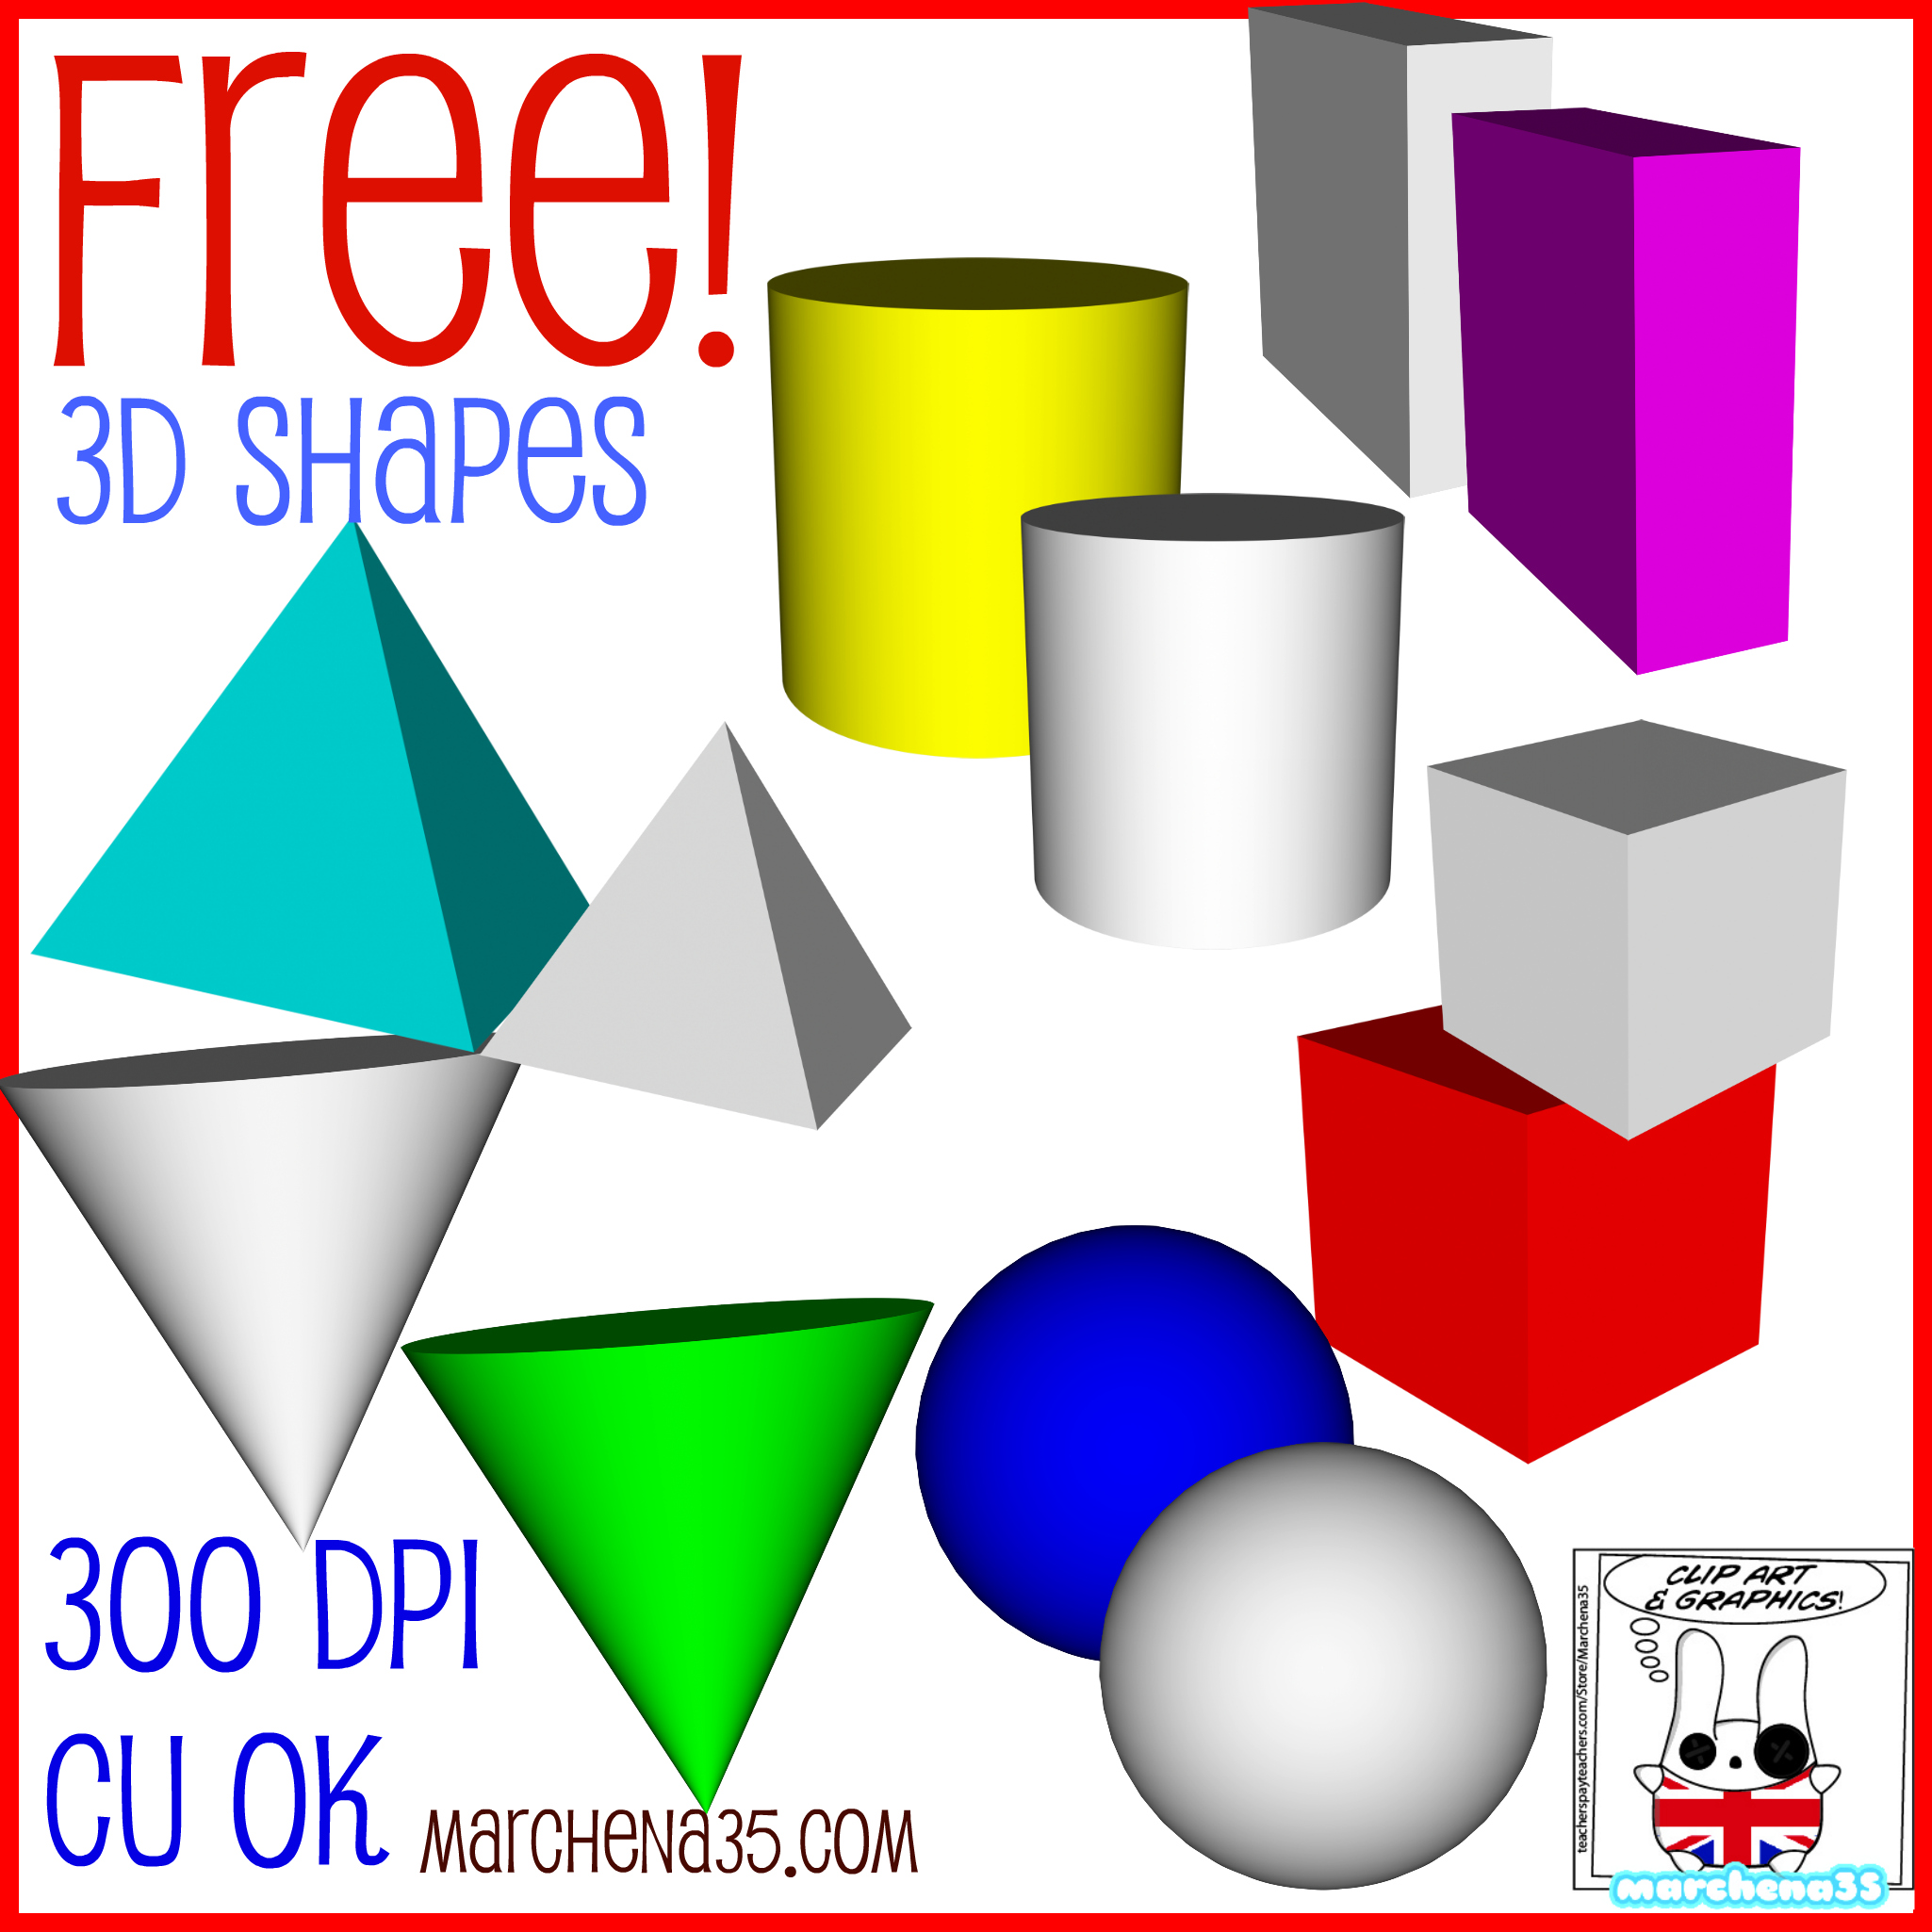 3d Shape Clipart | Free Download Clip Art | Free Clip Art | on ...